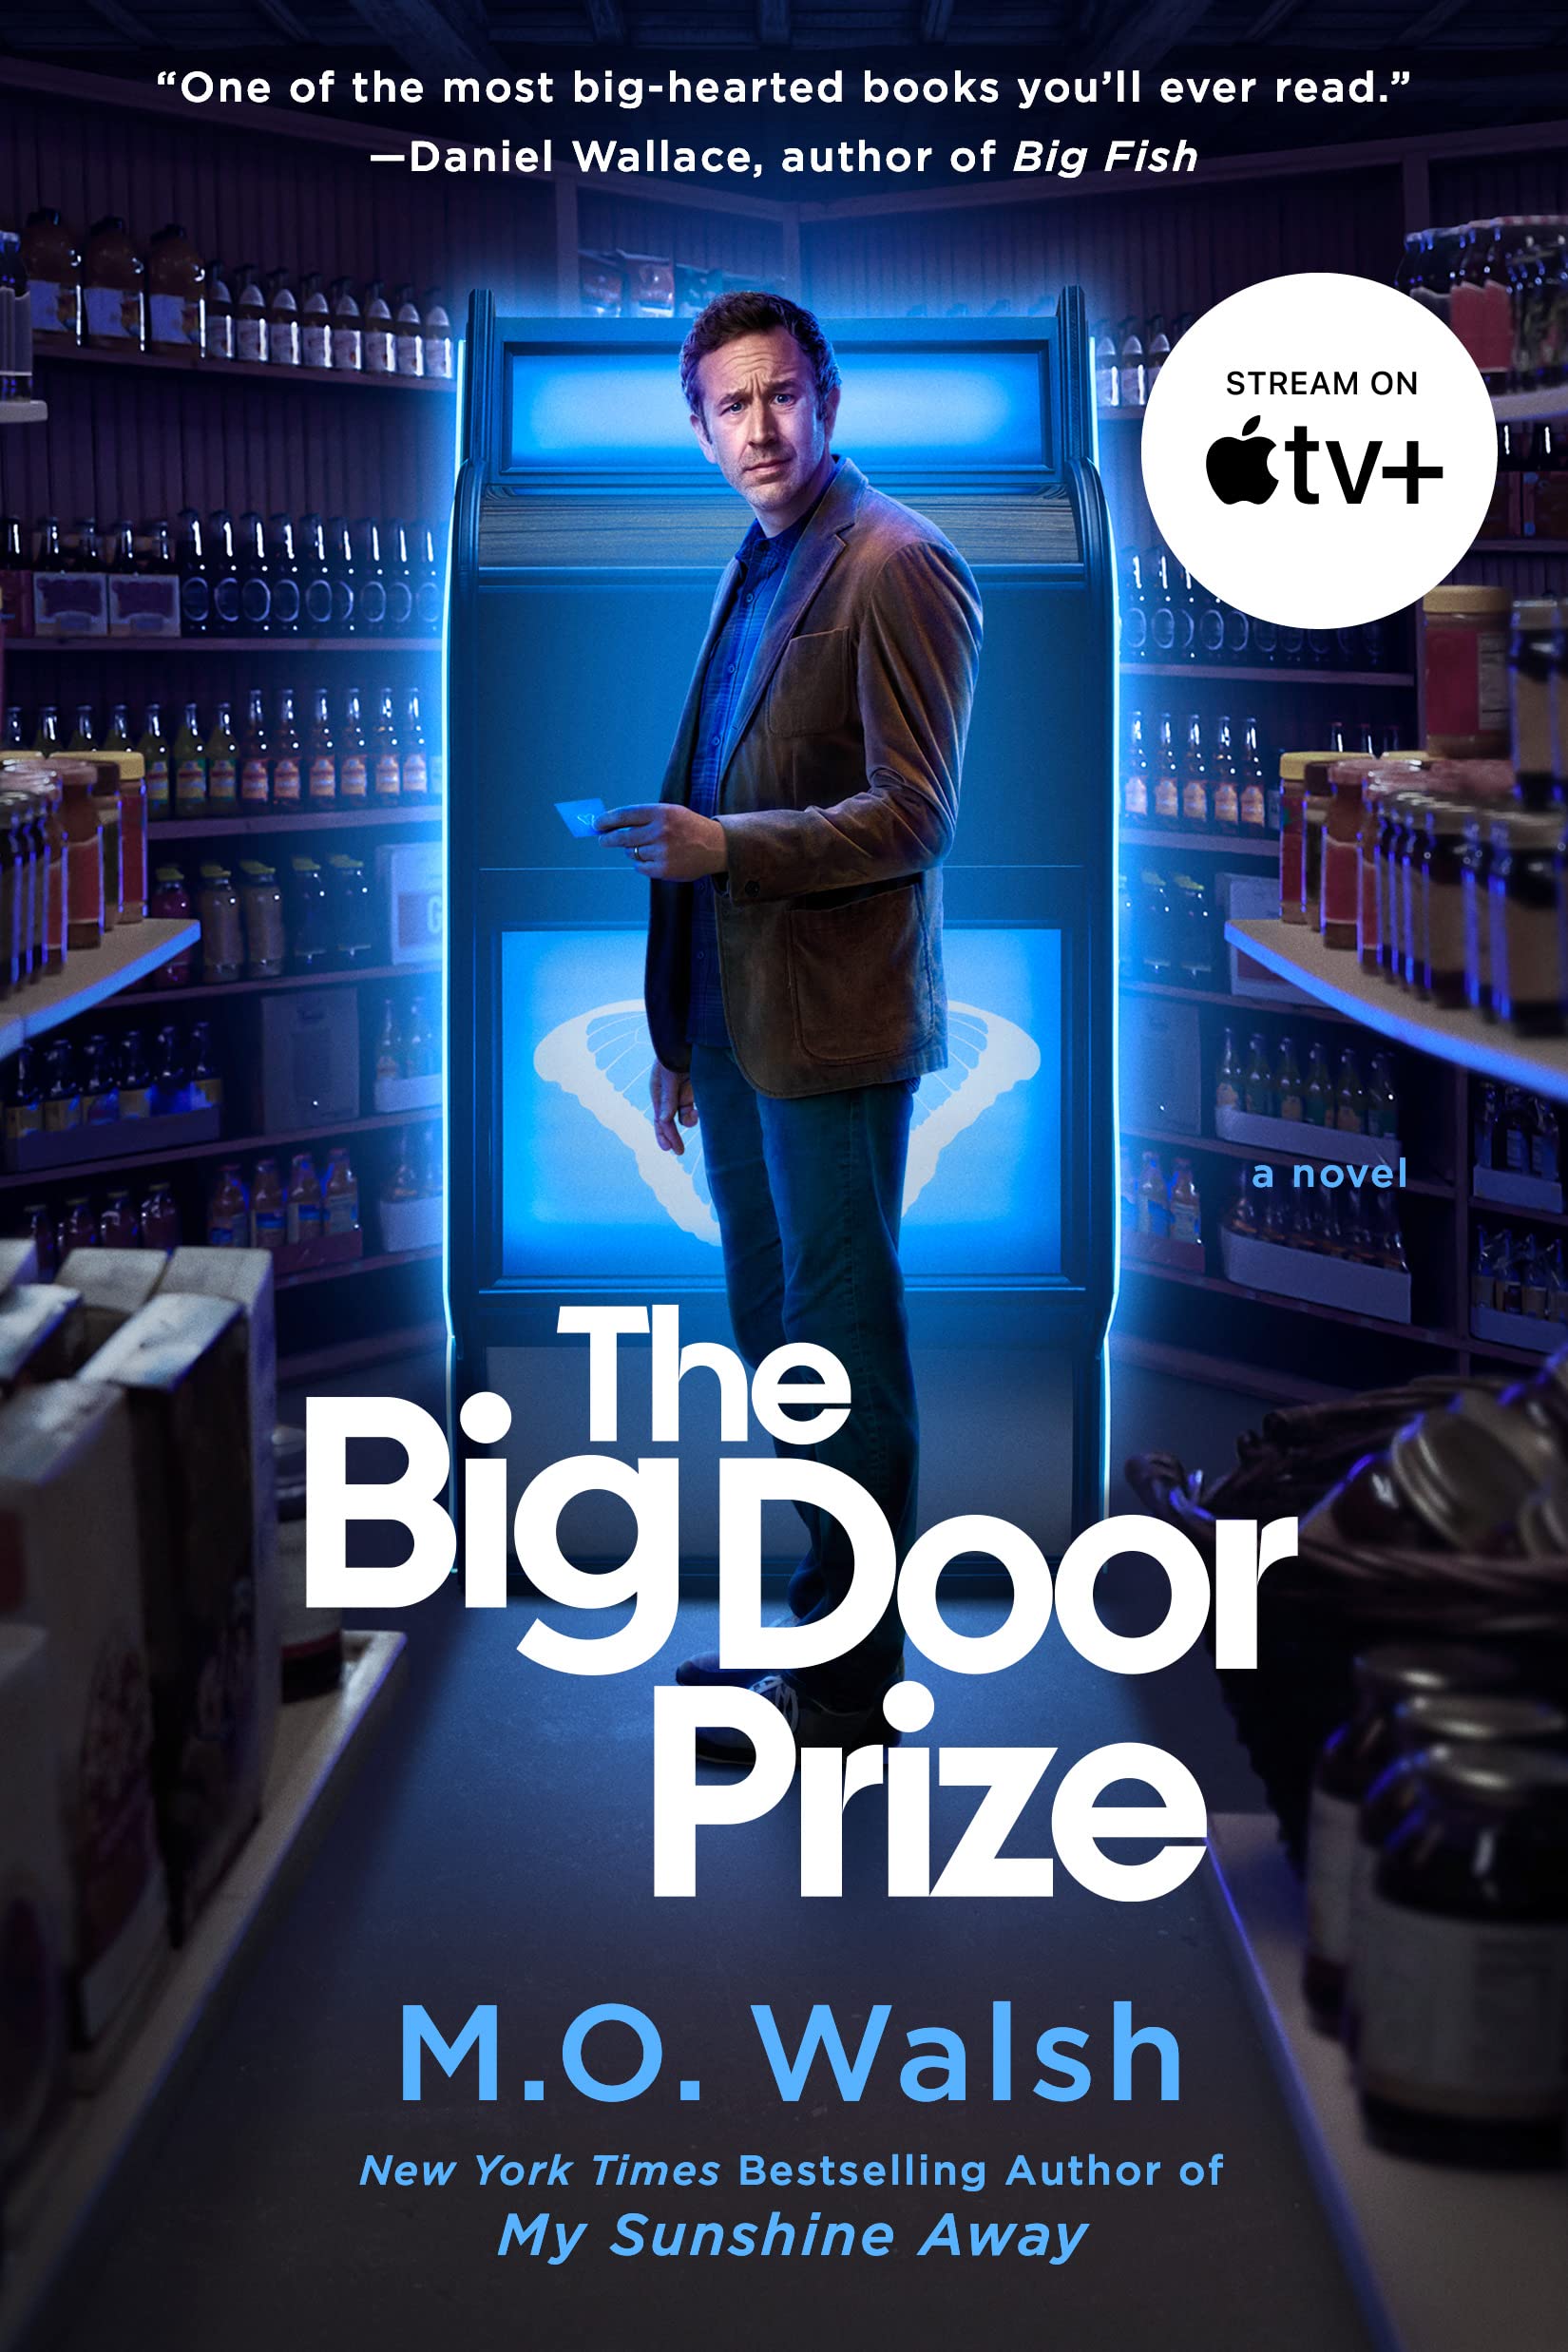 The Big Door Prize ebook $1.99 @ Amazon